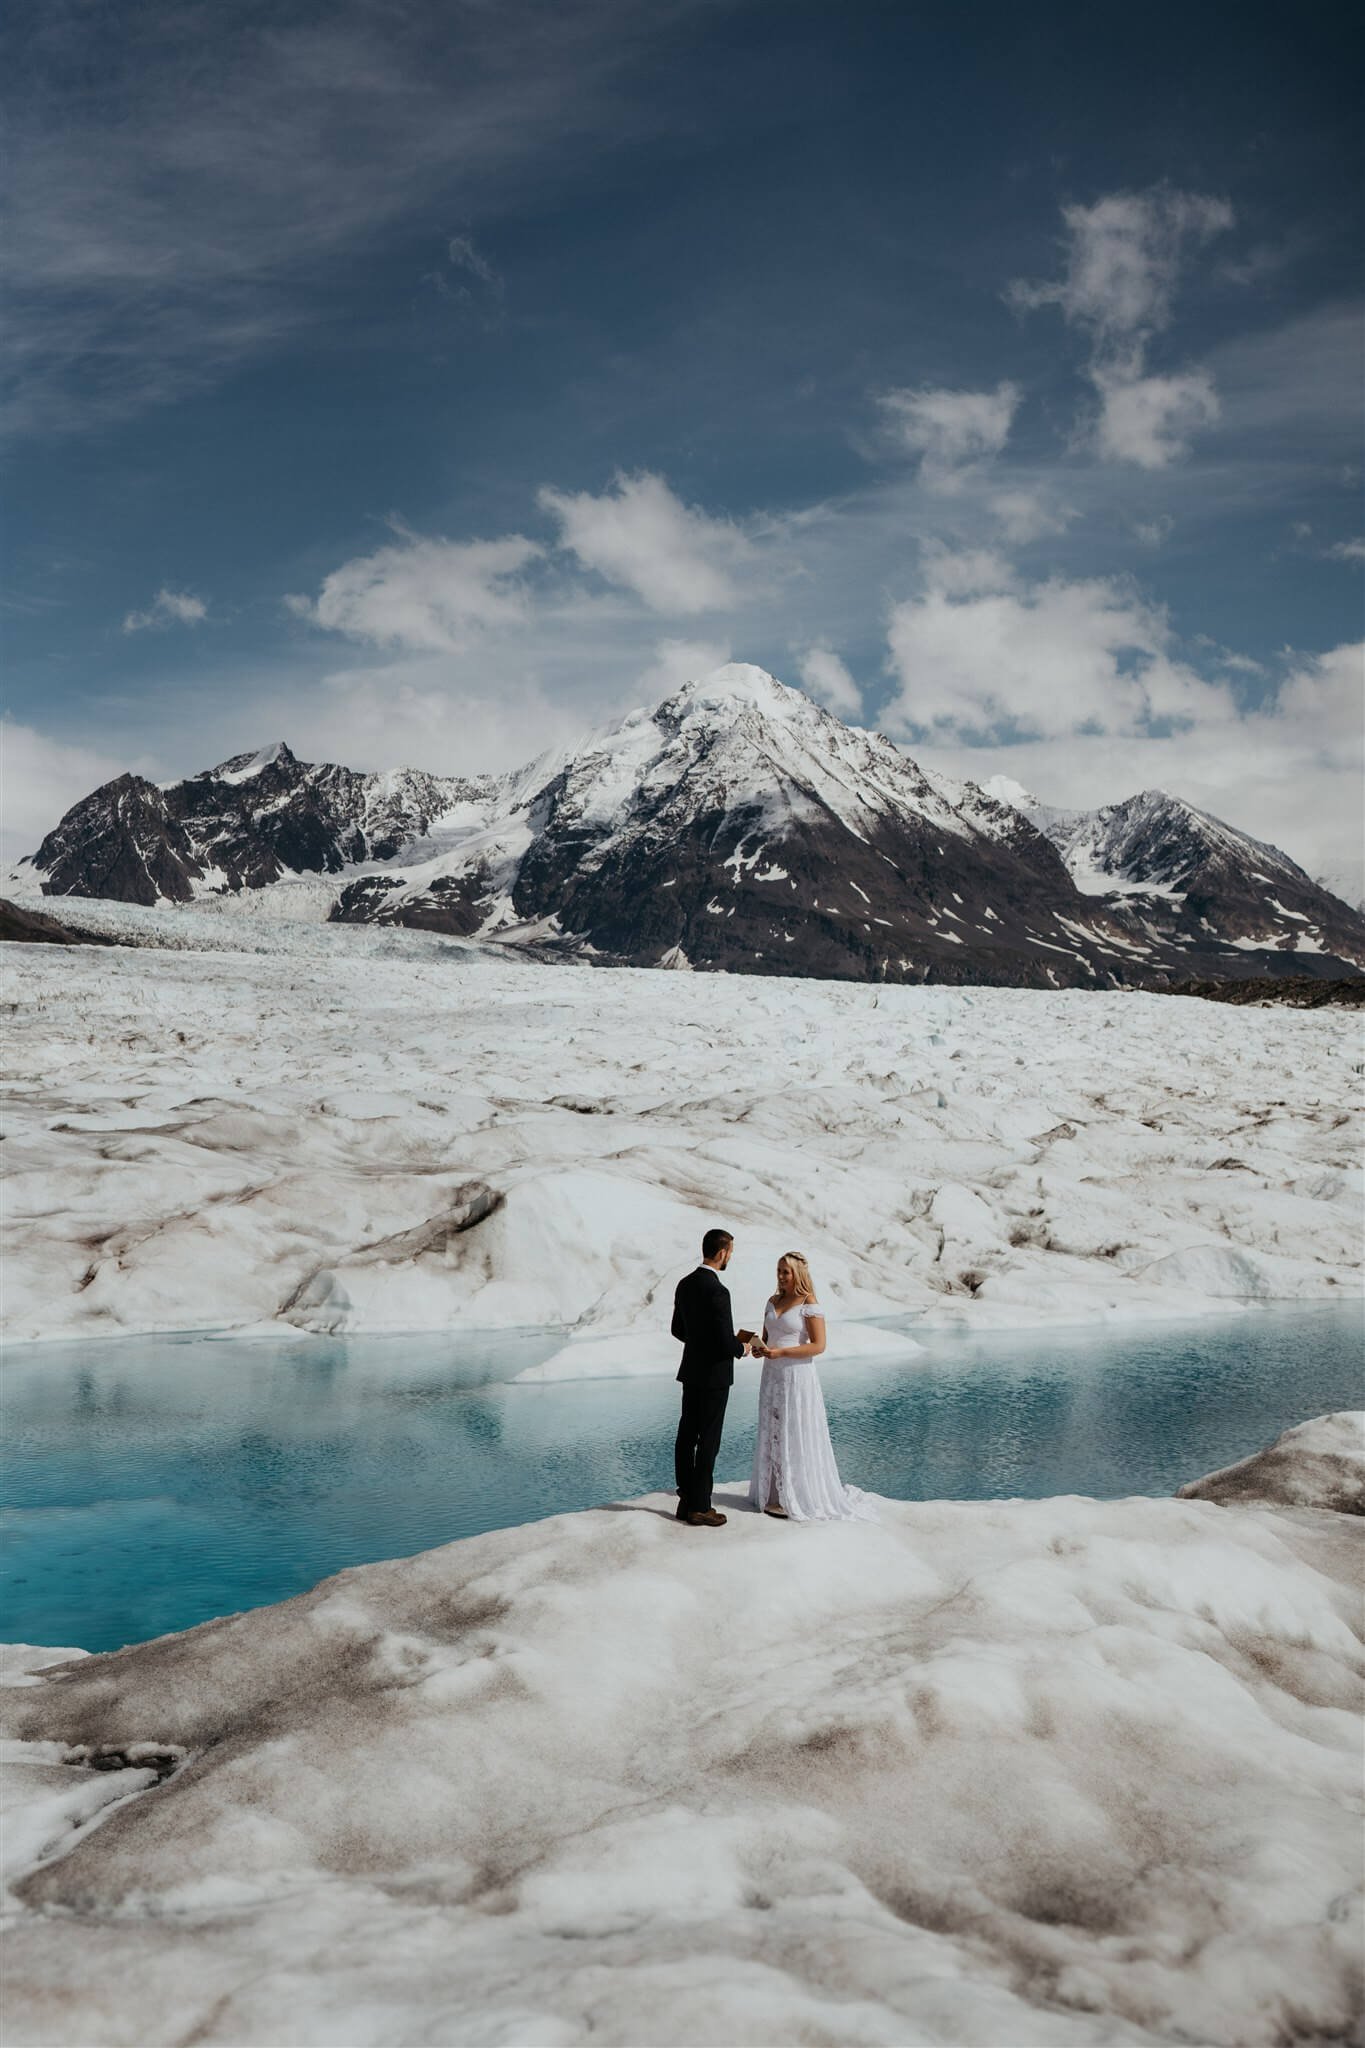 Outdoor elopement ceremony on an Alaskan glacier